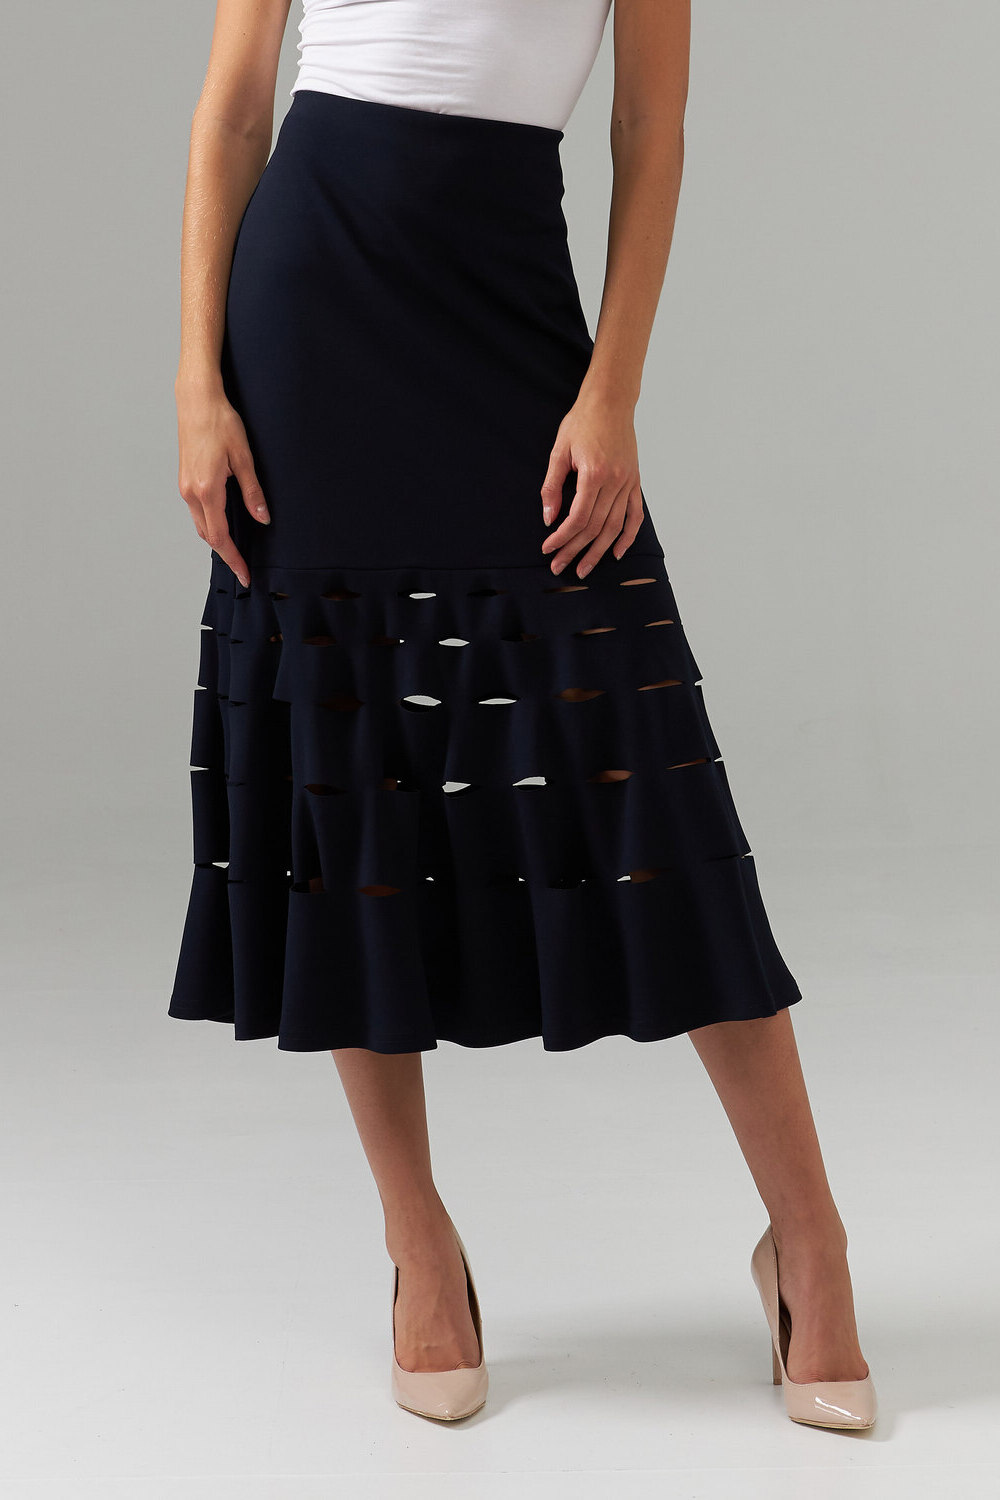 Joseph Ribkoff Skirt Style 203580. Midnight Blue